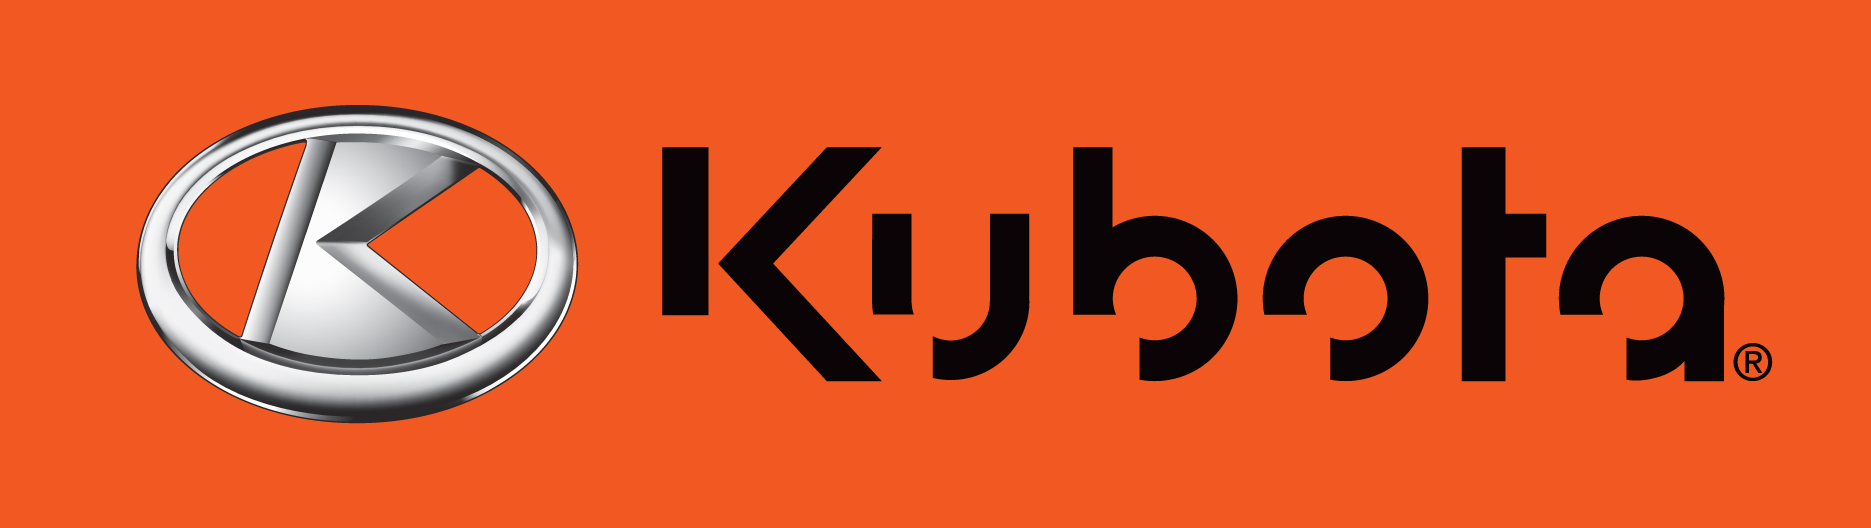 Kubota Logo.jpg